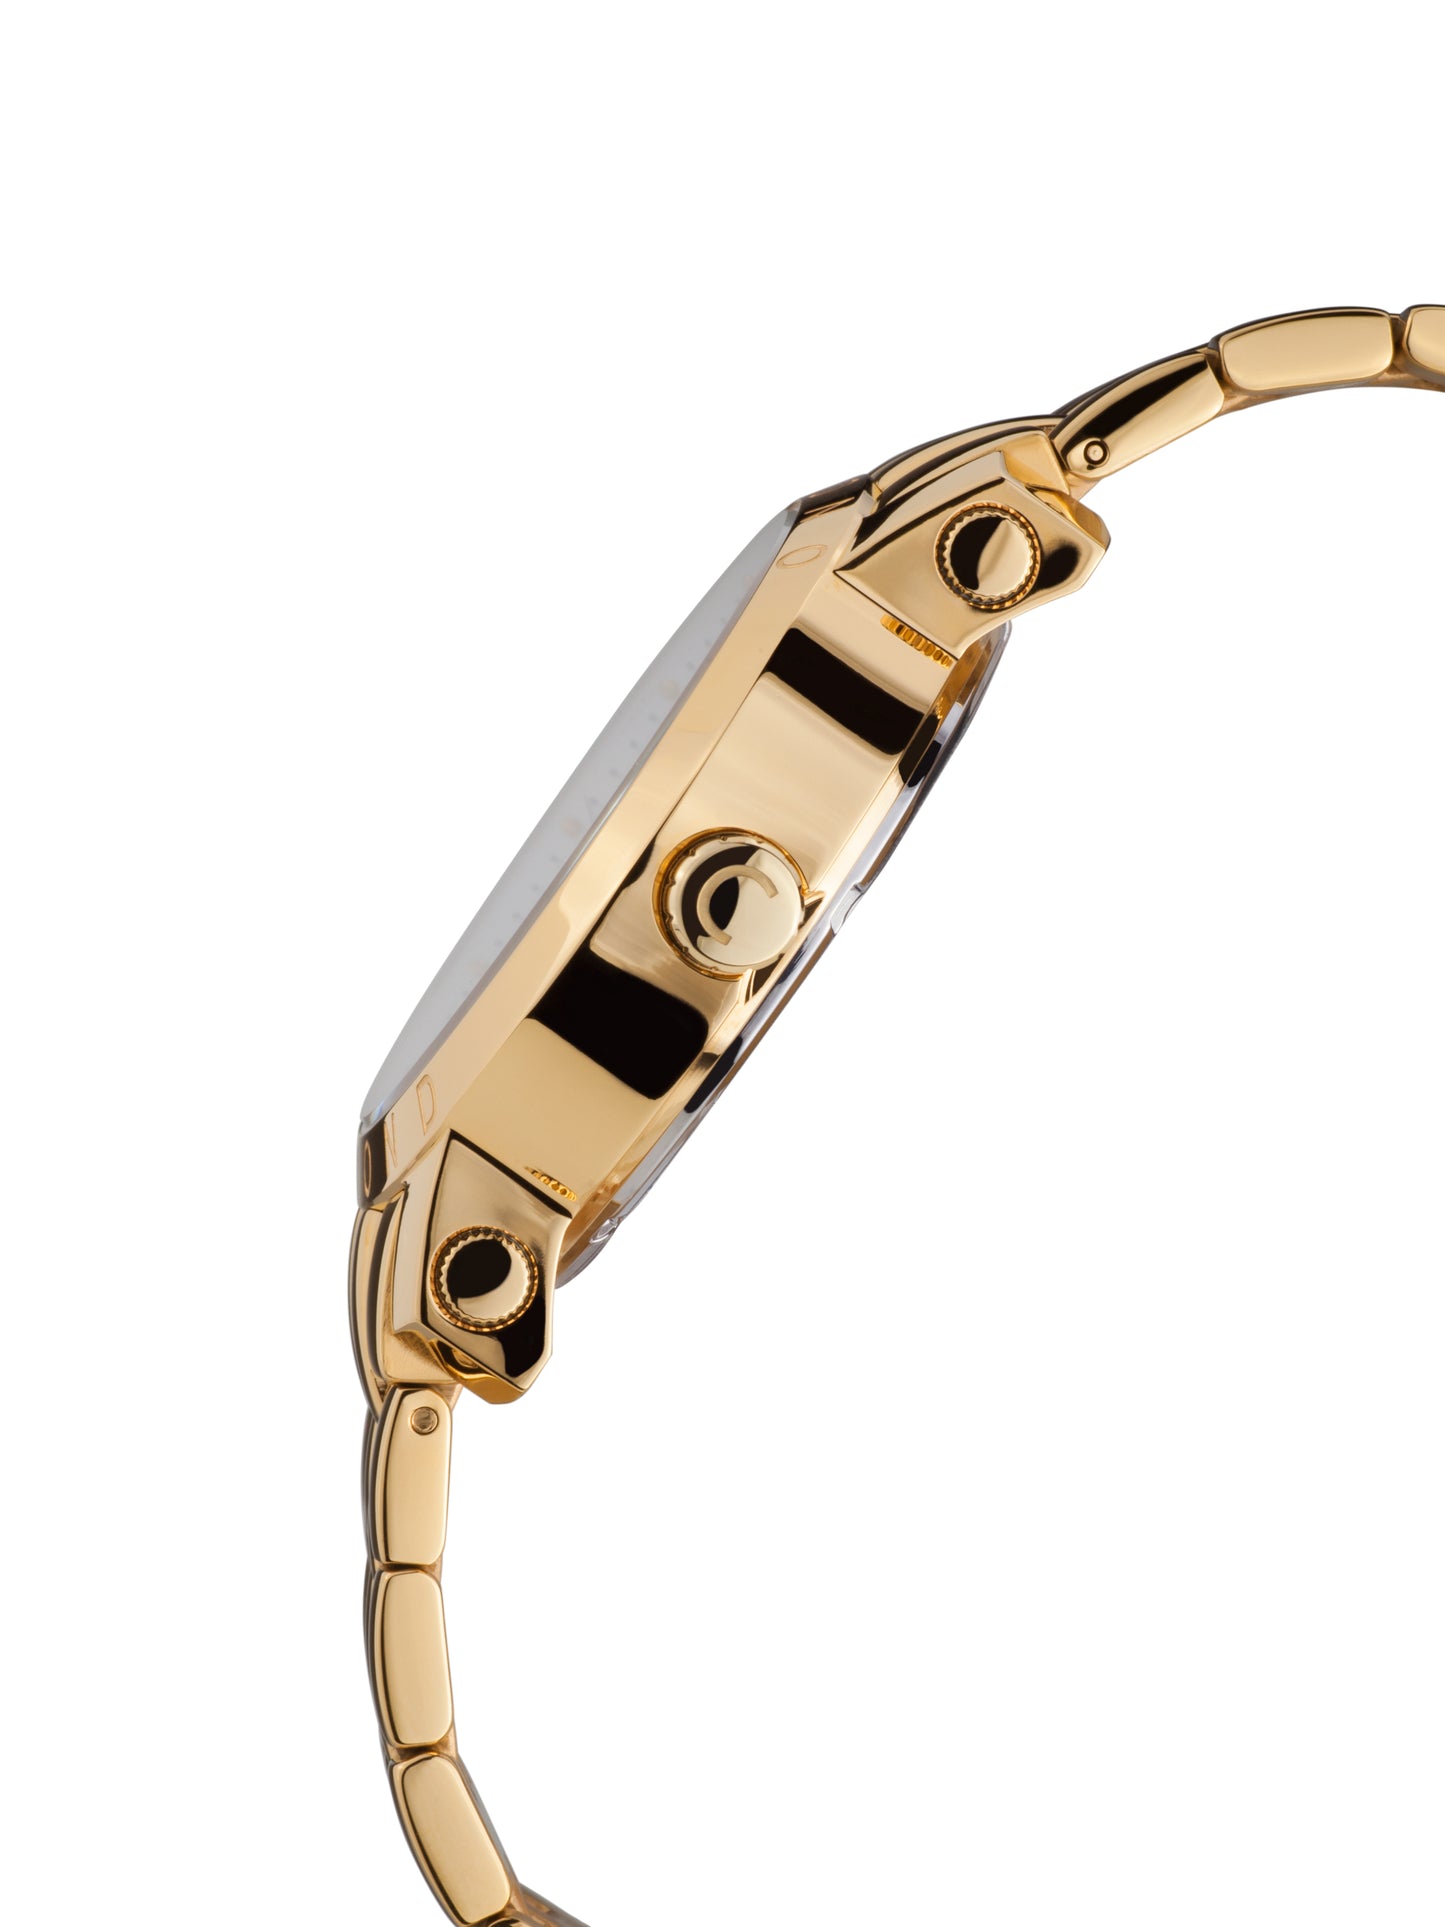 Automatic watches — Nestorius — Chrono Diamond — gold IP silver